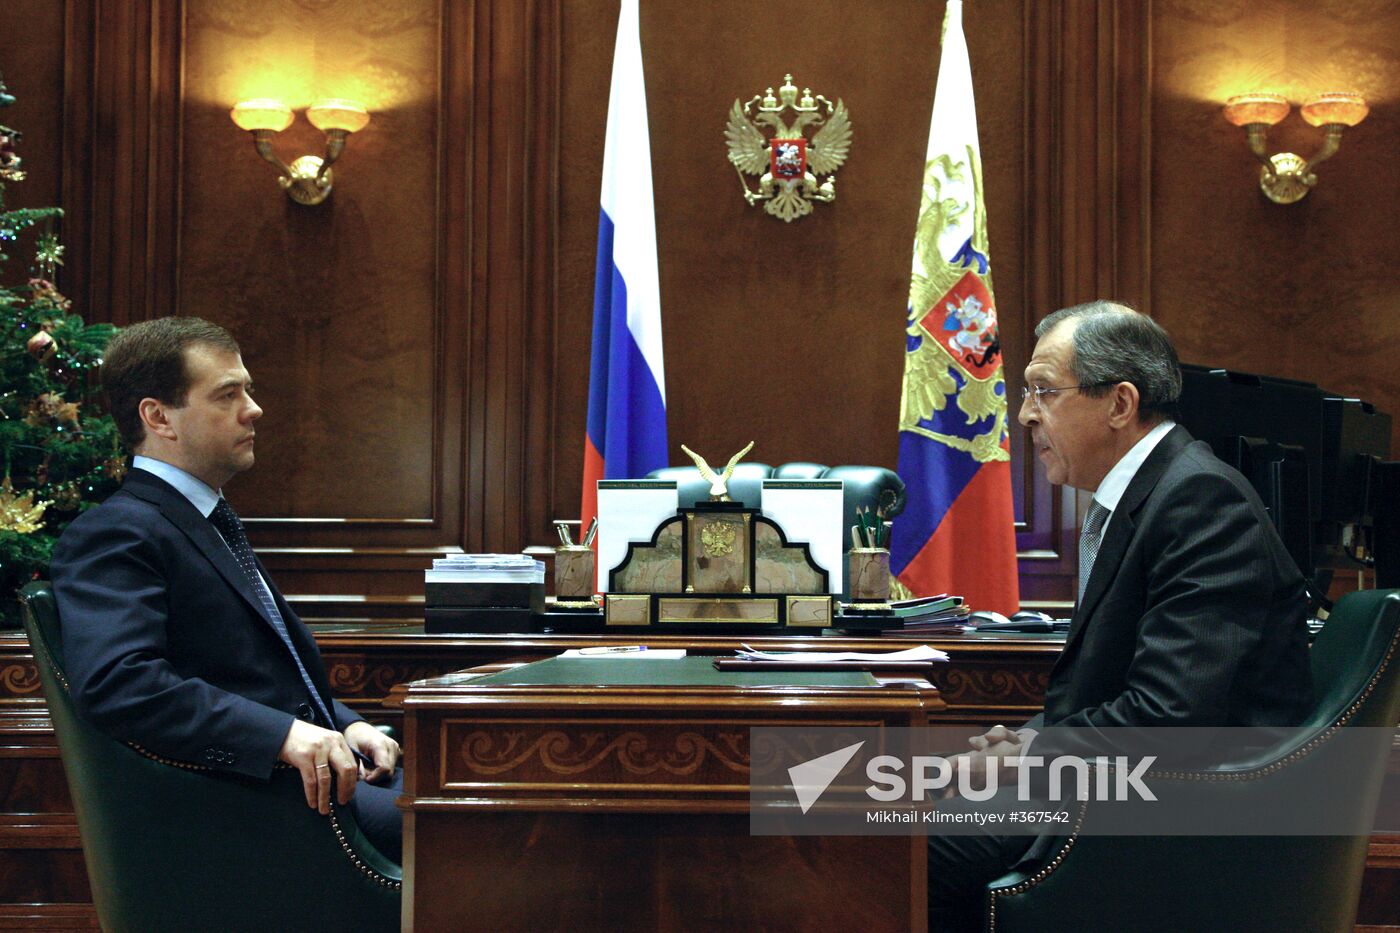 Dmitry Medvedev holds meeting with Sergei Lavrov